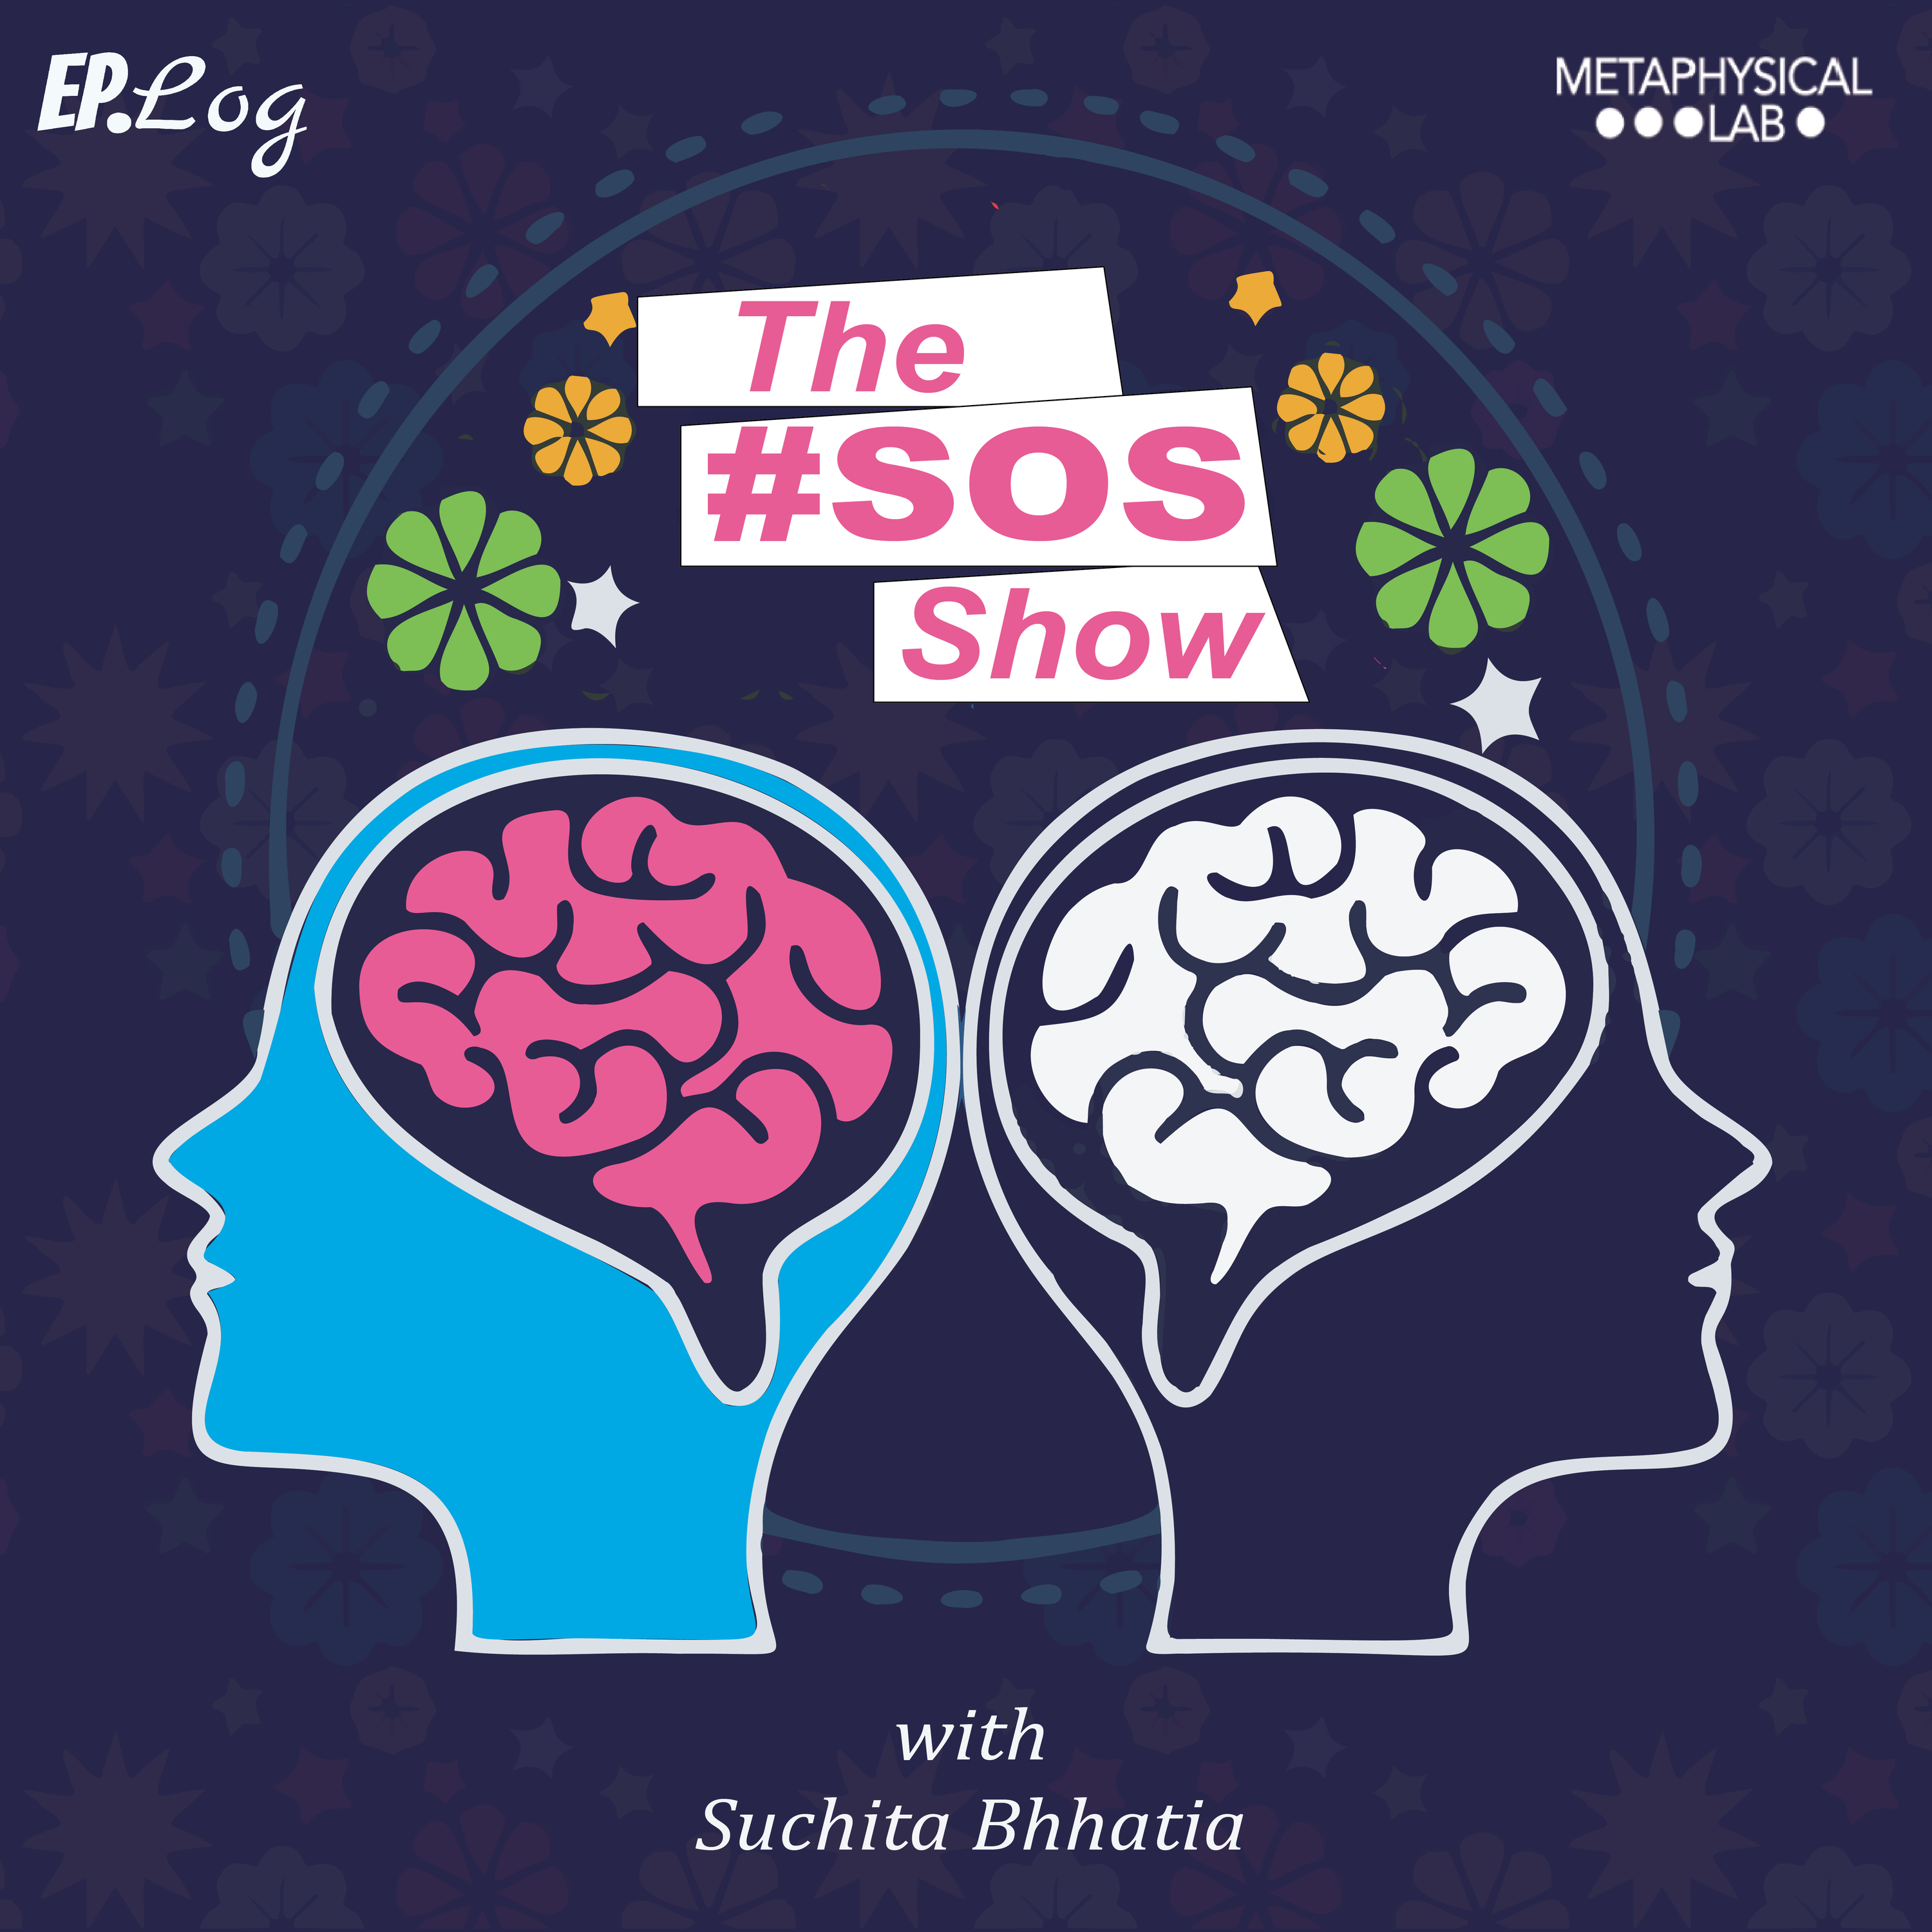 The SOS Show with Suchita